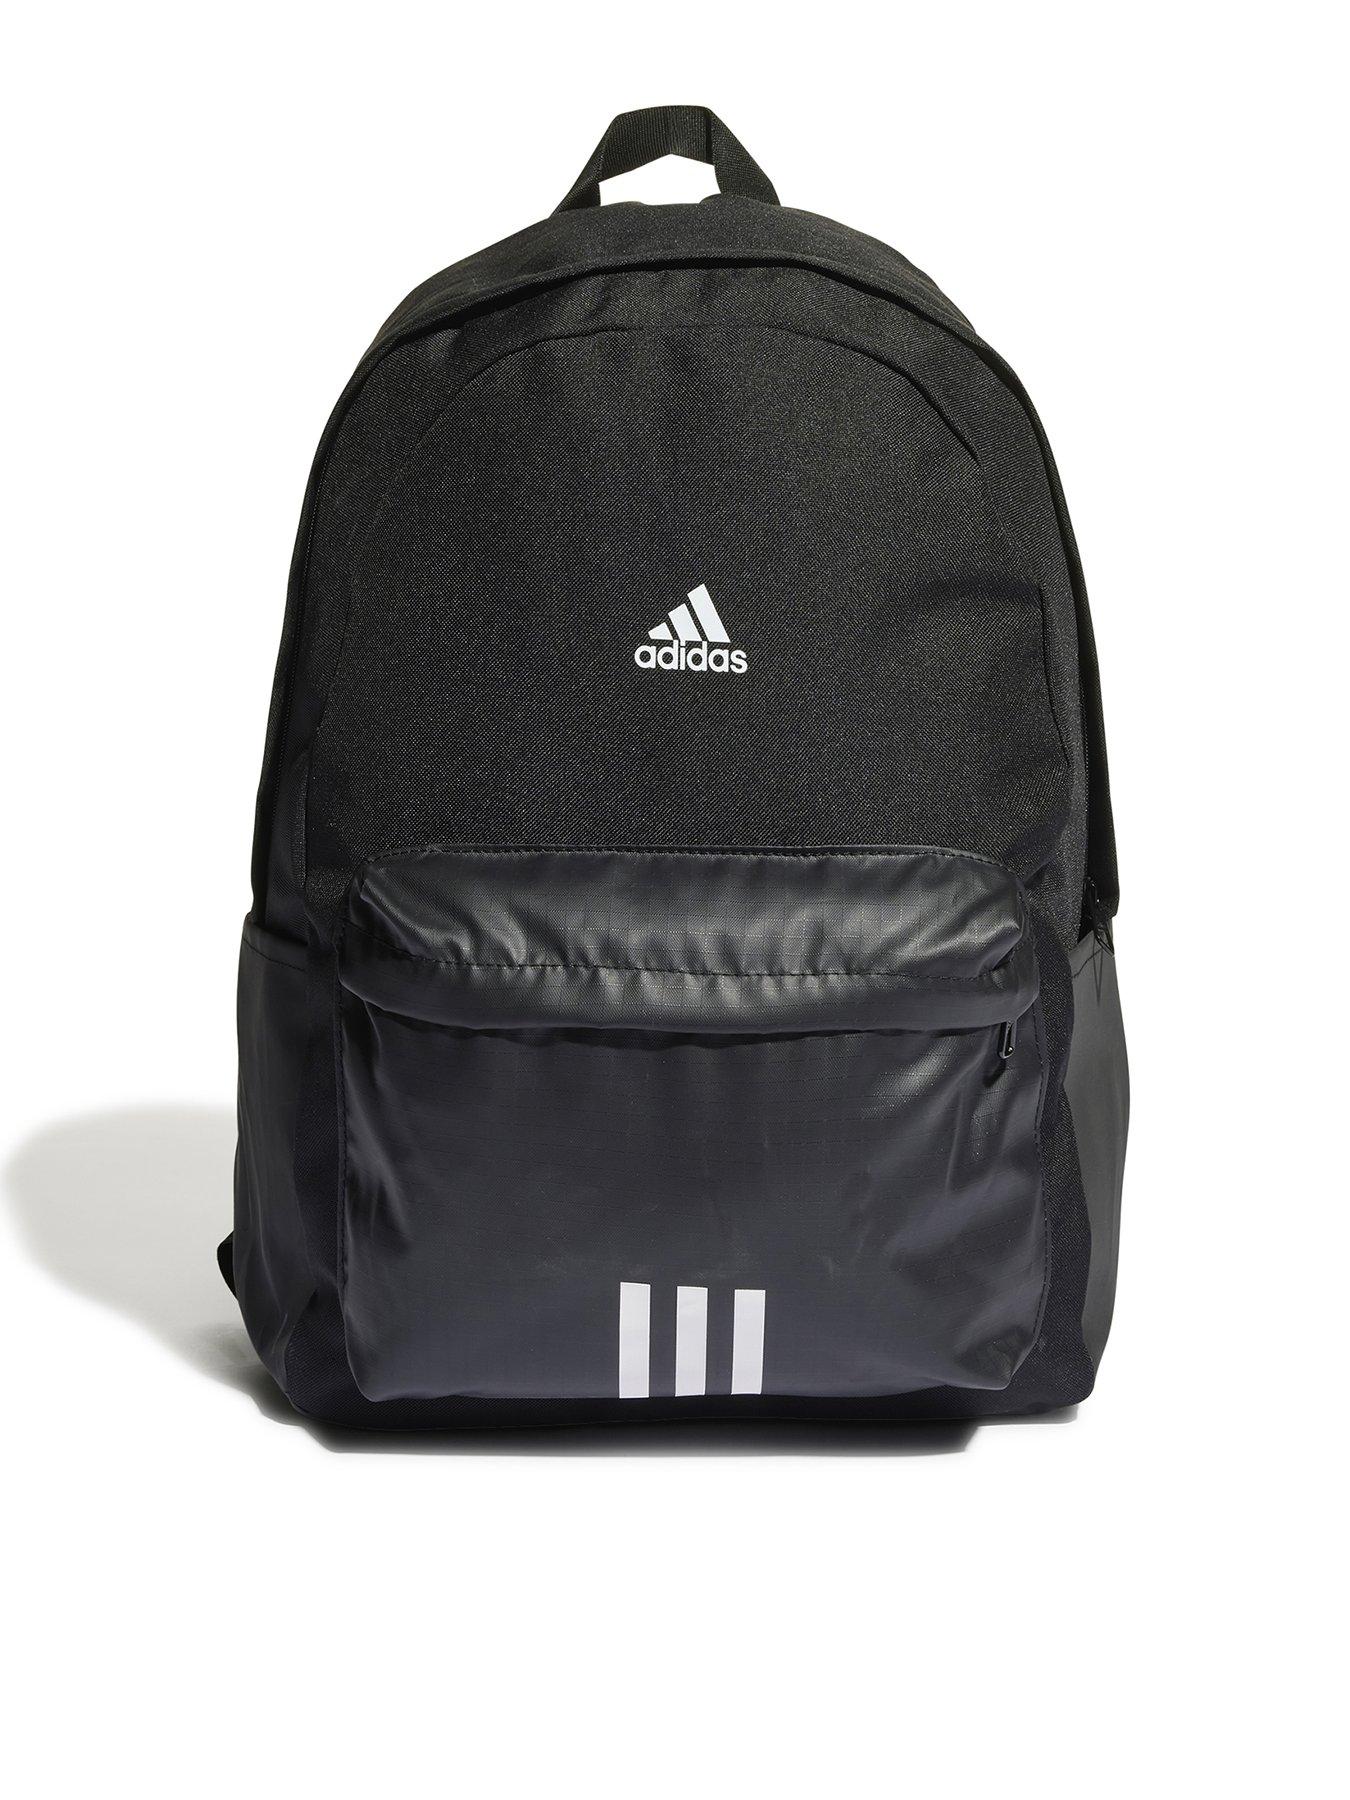 Adidas Sportswear Classic 3 Stripe Backpack - Black/White